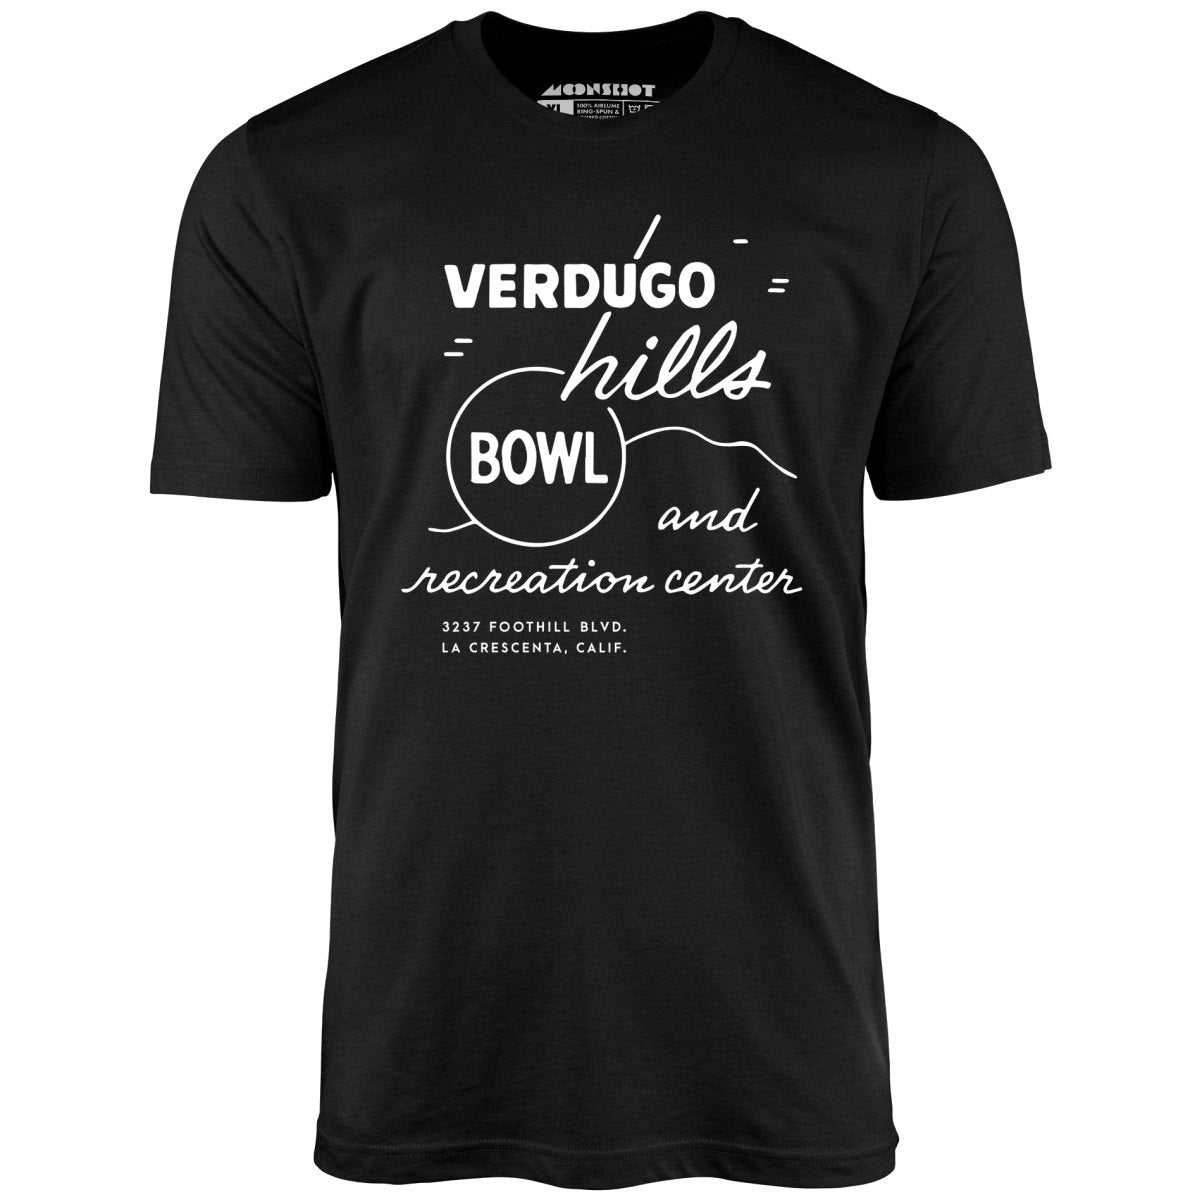 Verdugo Hills v2 - La Crescenta, CA - Vintage Bowling Alley - Unisex T-Shirt